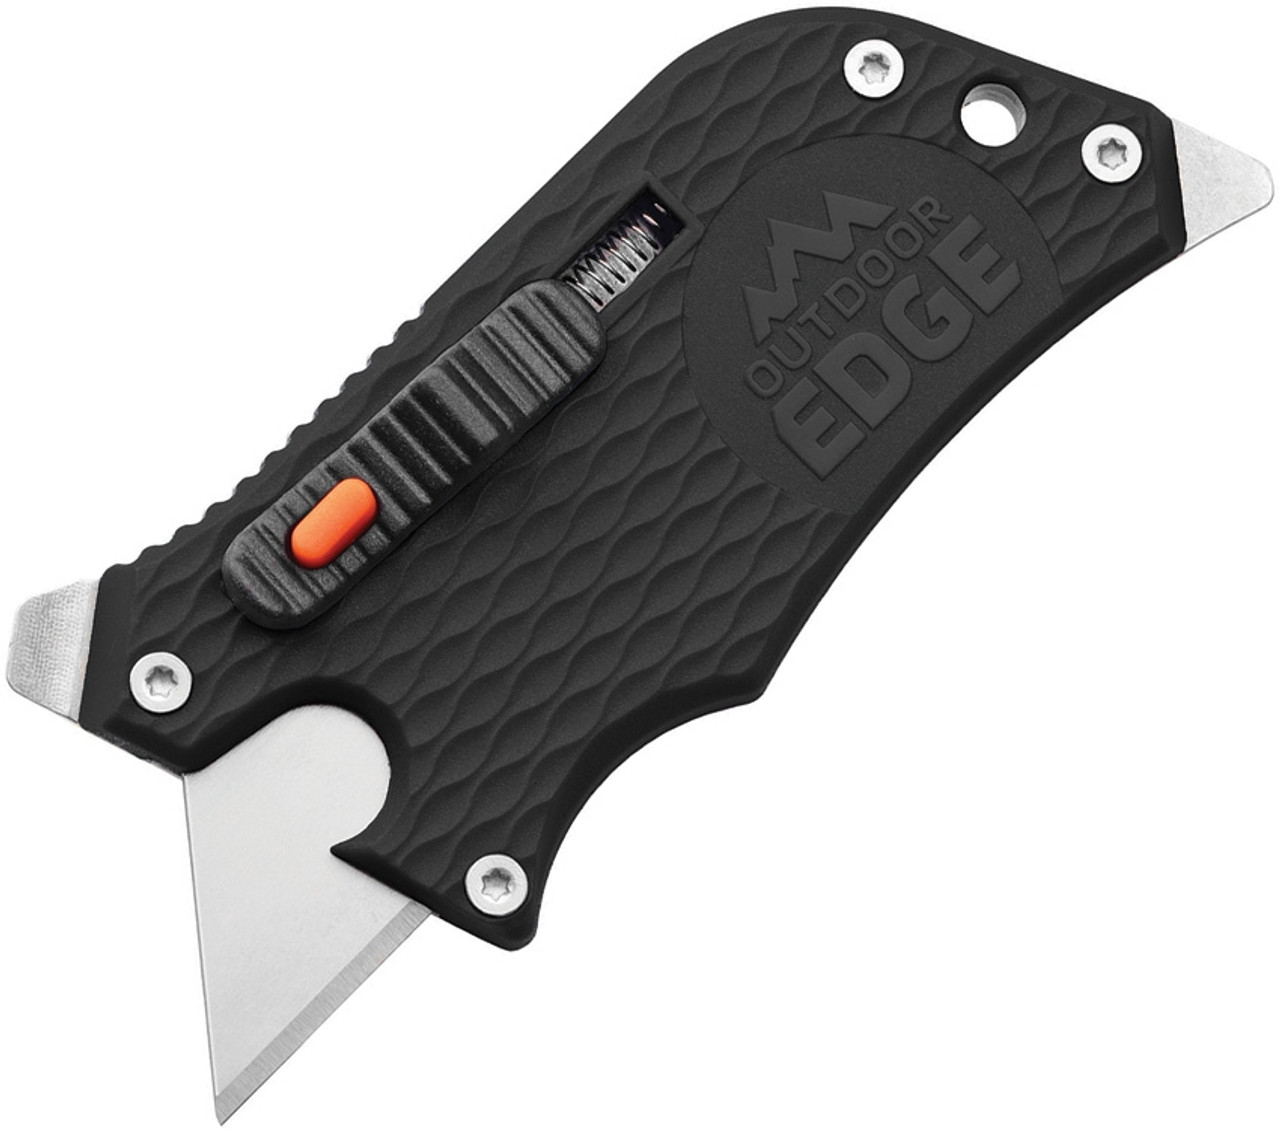 Outdoor Edge Slidewinder Razor Blade Mulit-Tool, Black